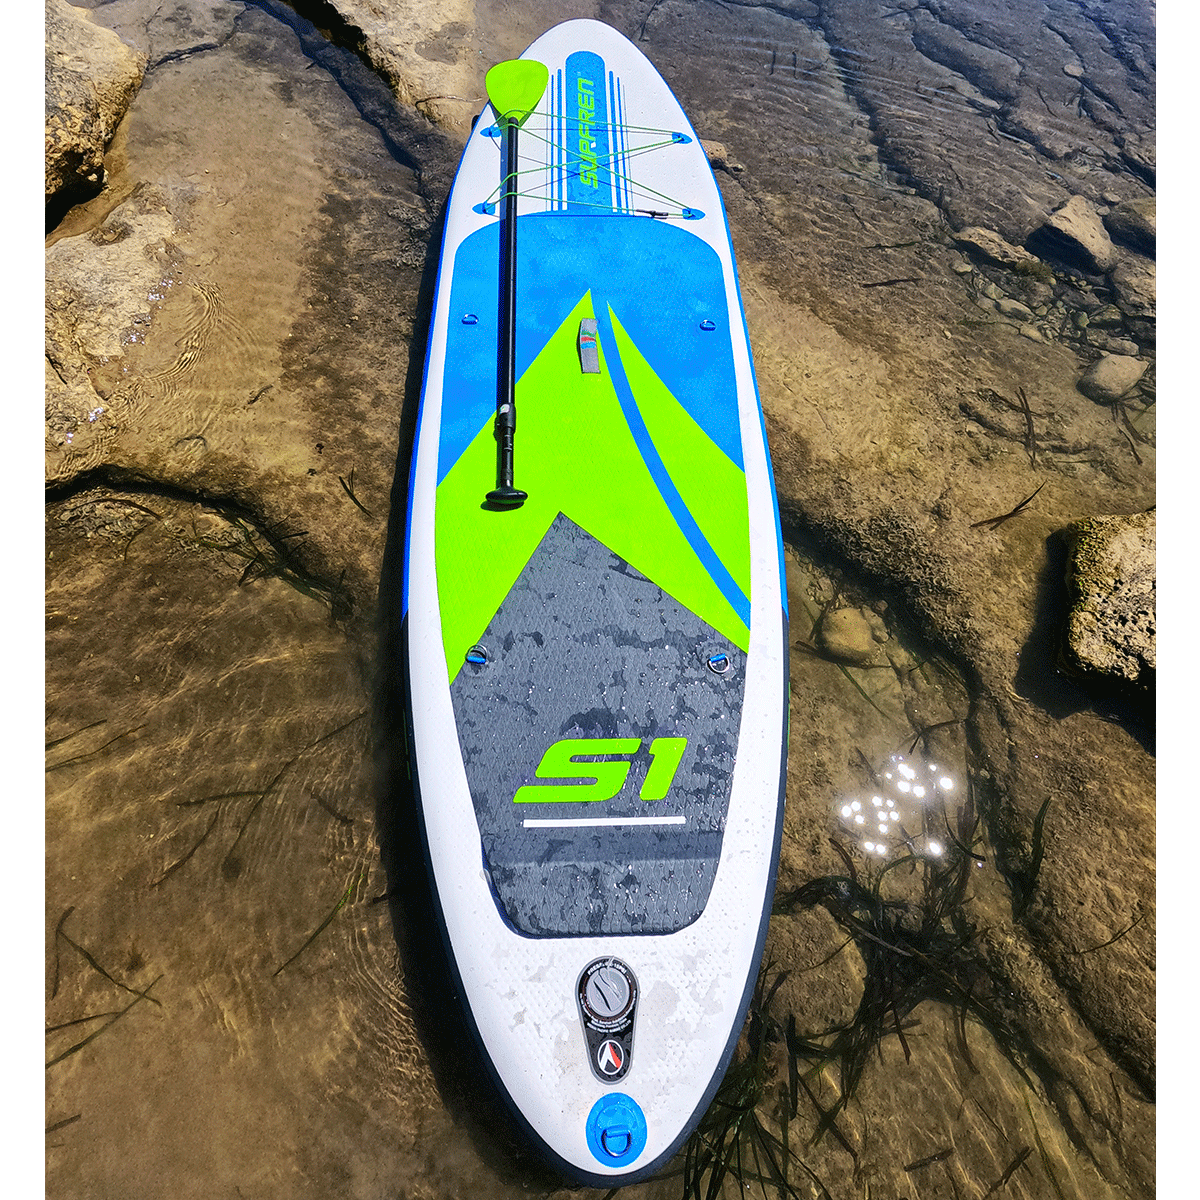 Tabla Paddle Surf Hinchable Surfren S1 10'0"  MKP